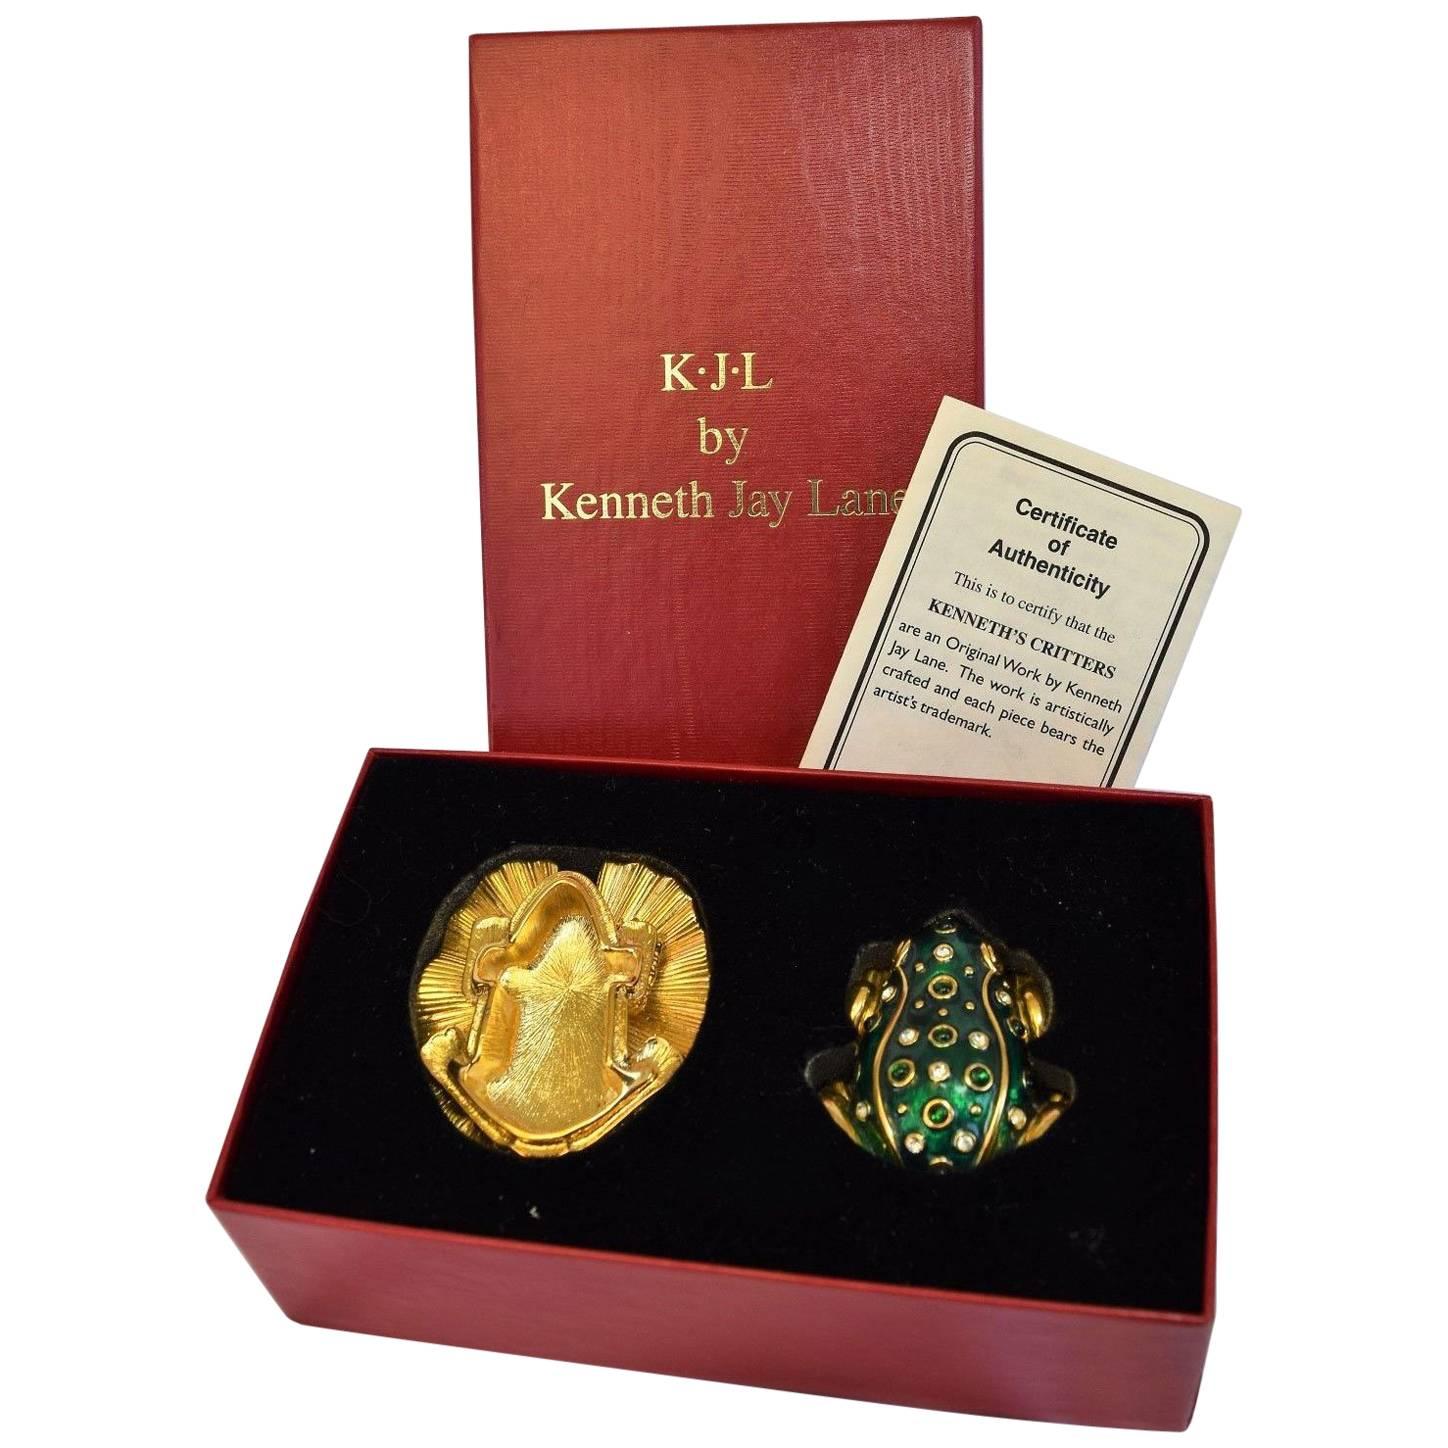 Kenneth Jay Lane KJL Green Frog Pin Brooch and Trinket Pill Box